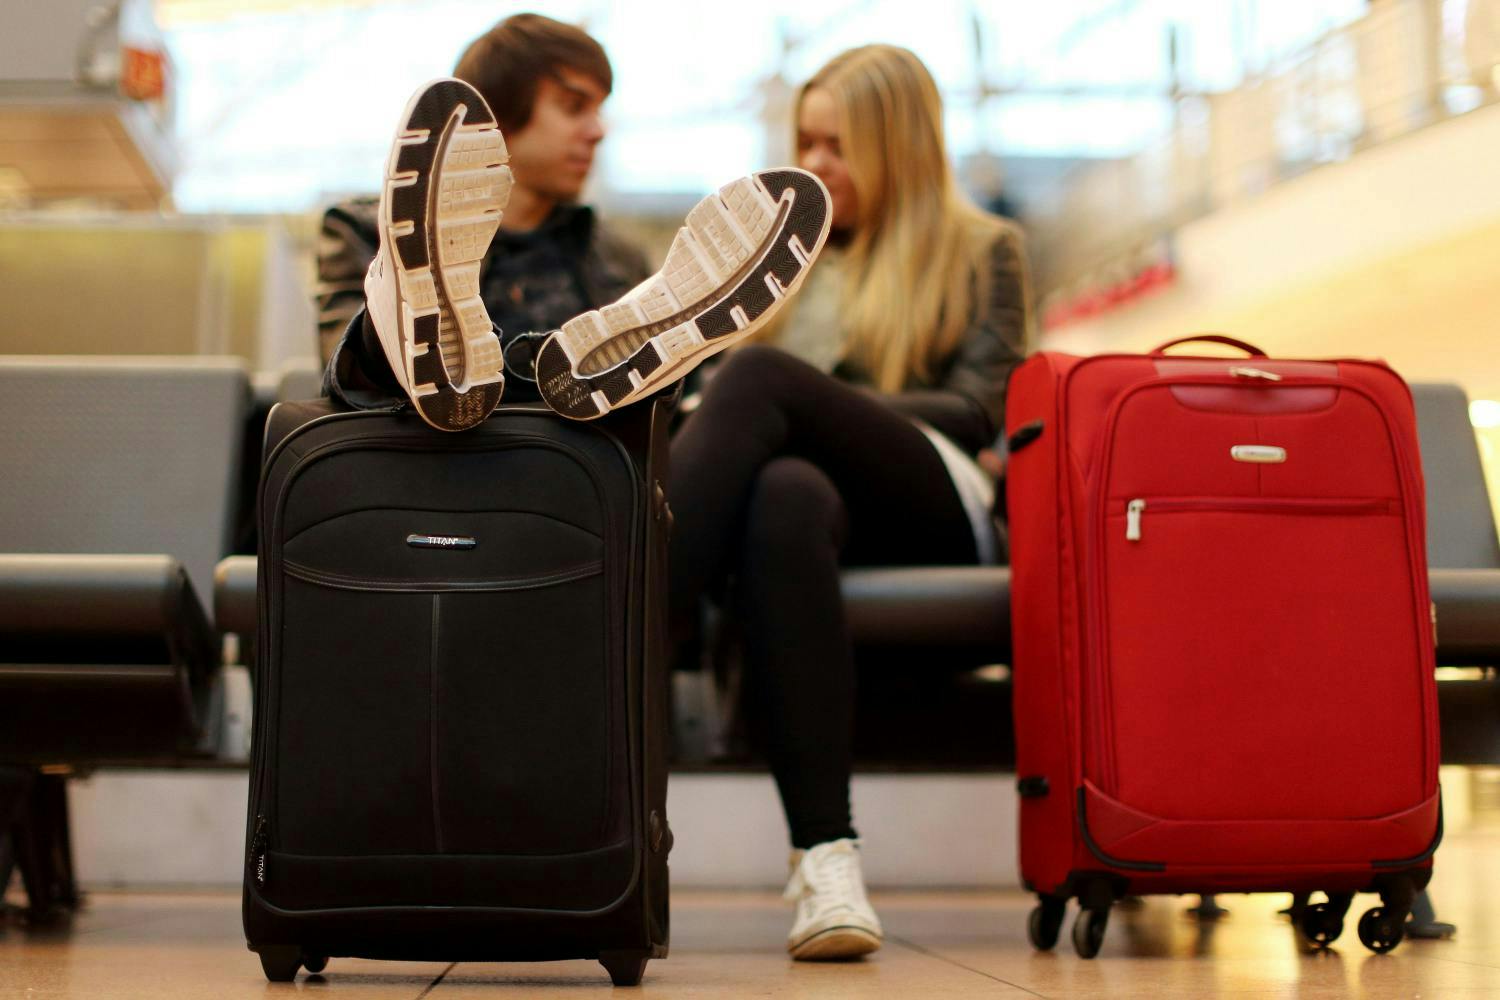 horizontal|traveller|airport|suitcase|illustration|strike|air travel hamburg hamburg (hansestadt) luggage furniture chair footwear shoe clothing apparel human person